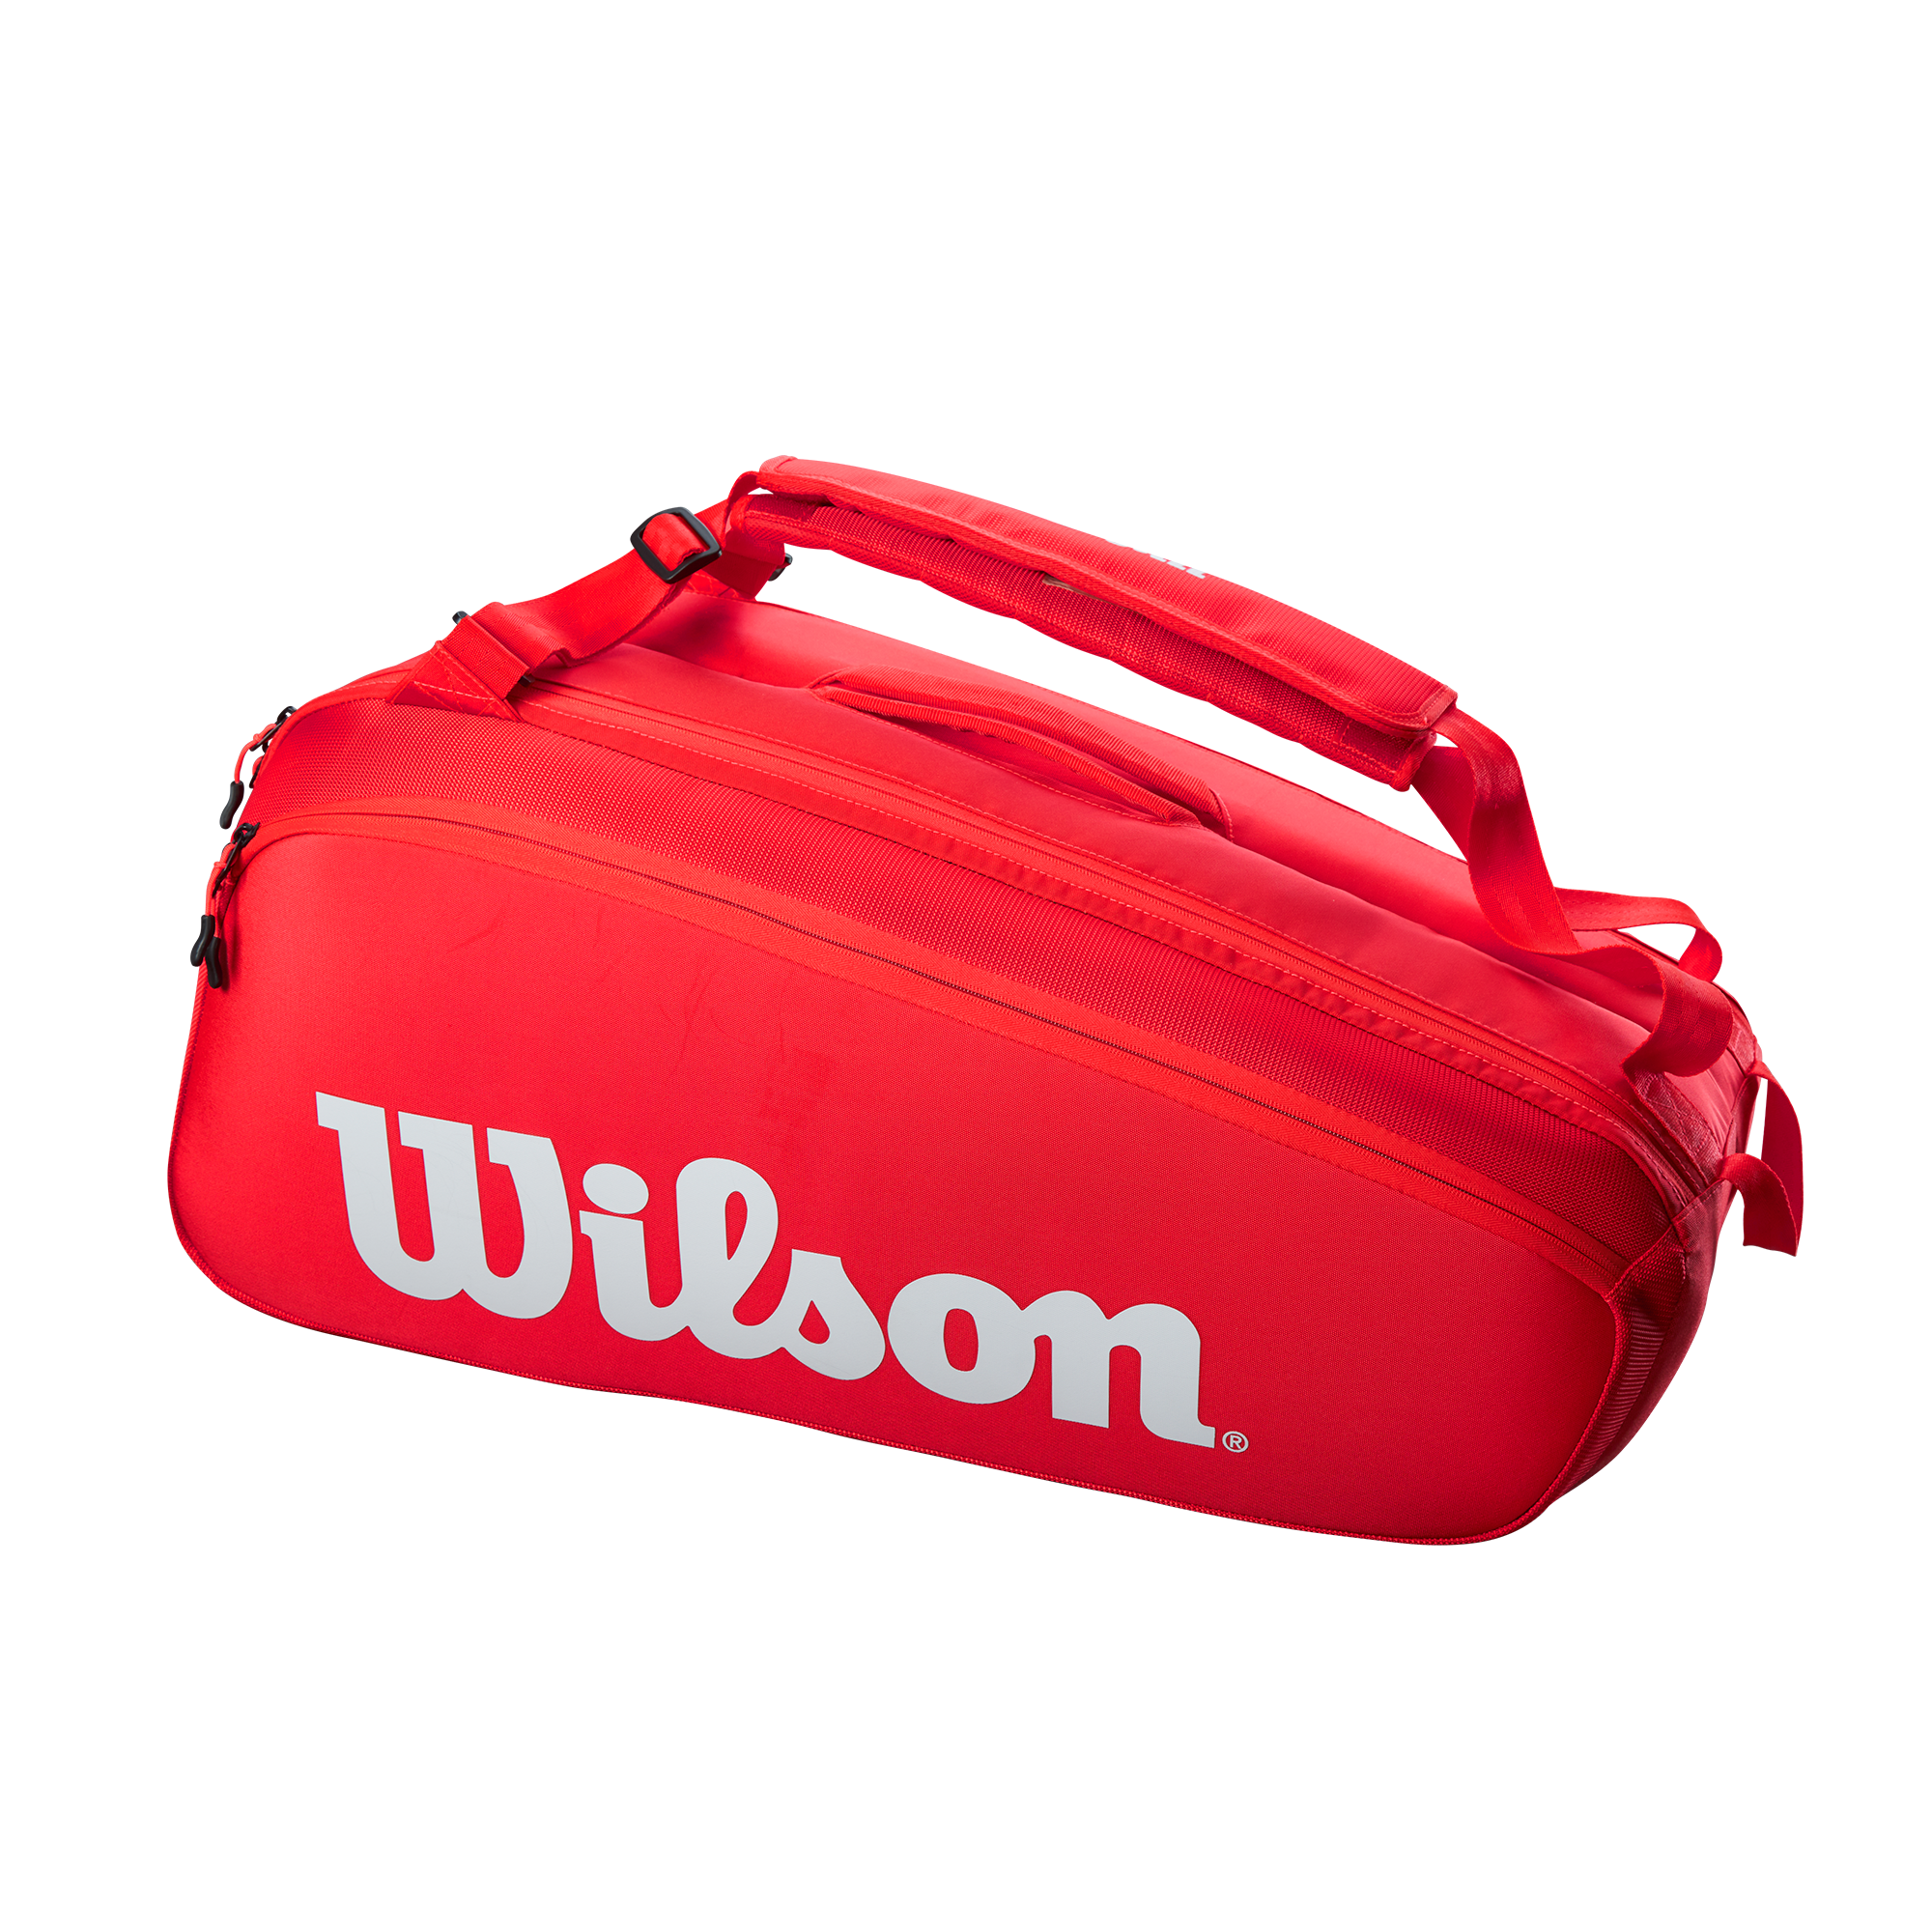 Wilson Super Tour Tennis Bag 9PK